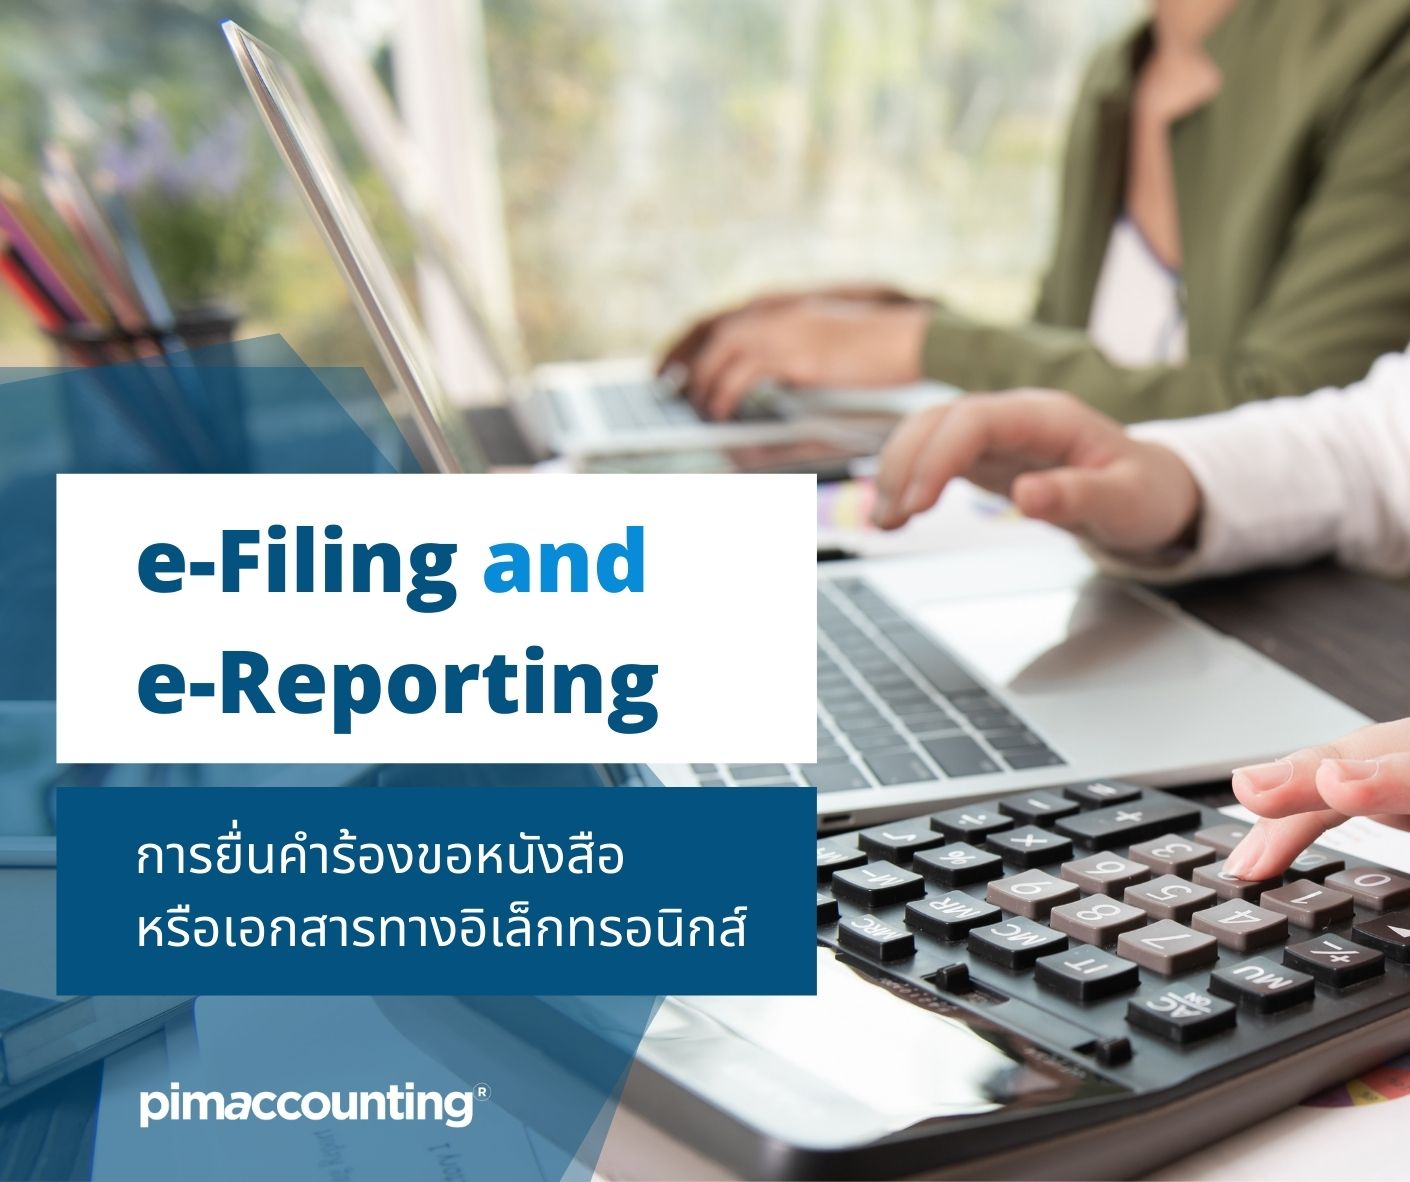 e-Filing and e-Reporting การยื่นคำร้องขอหนังสือหรือเอกสารทางอิเล็กทรอนิก